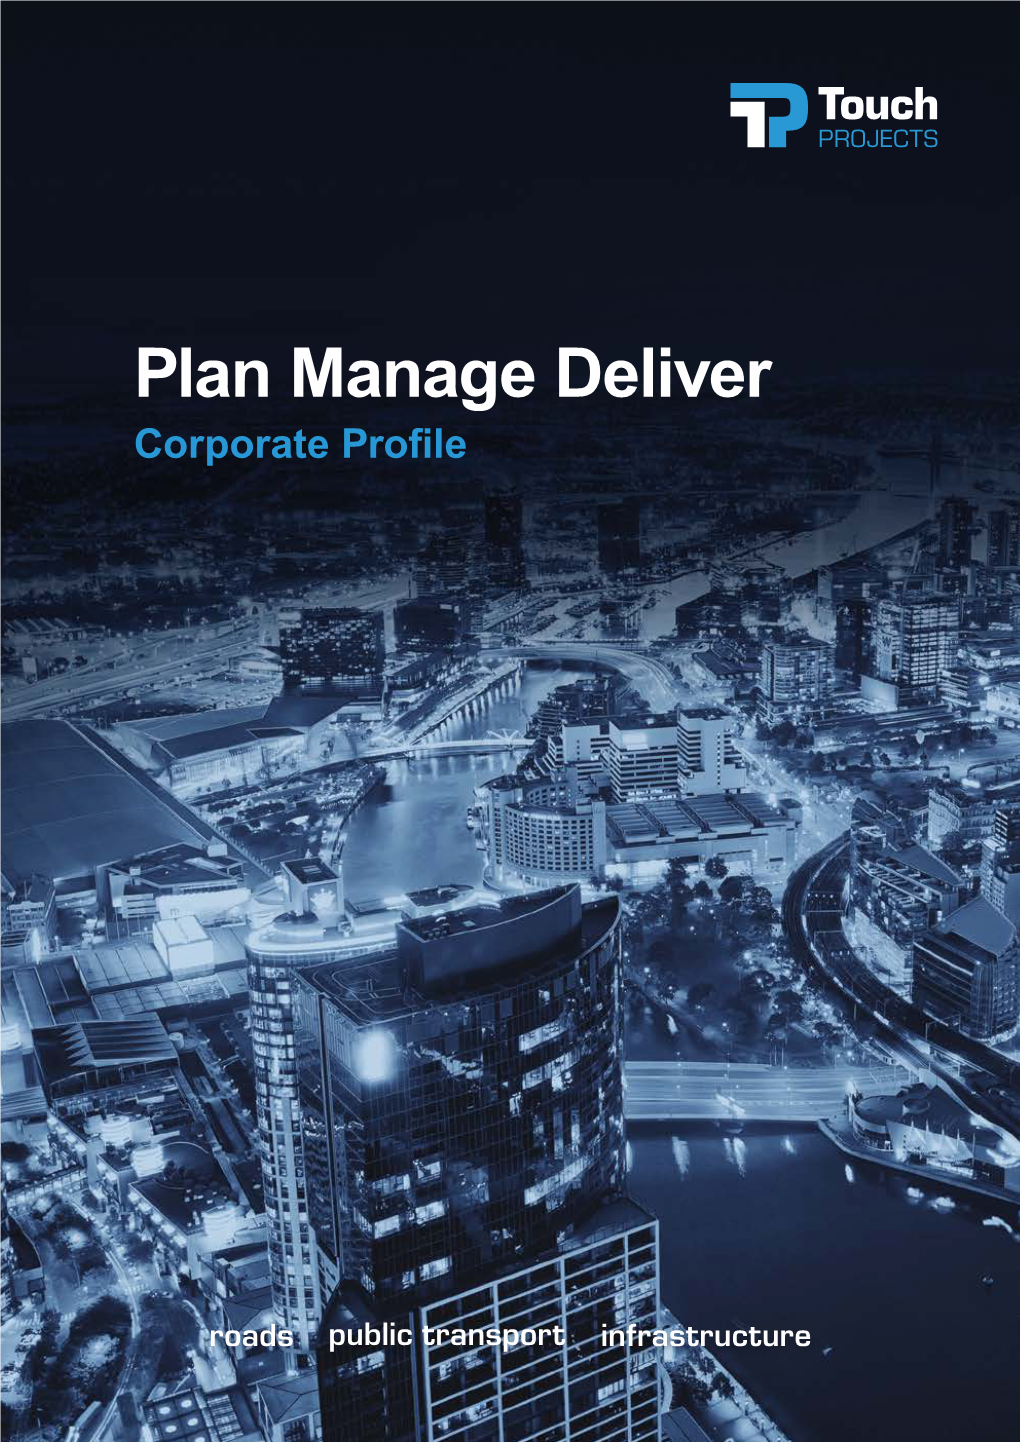 Plan Manage Deliver Corporate Profile Contents